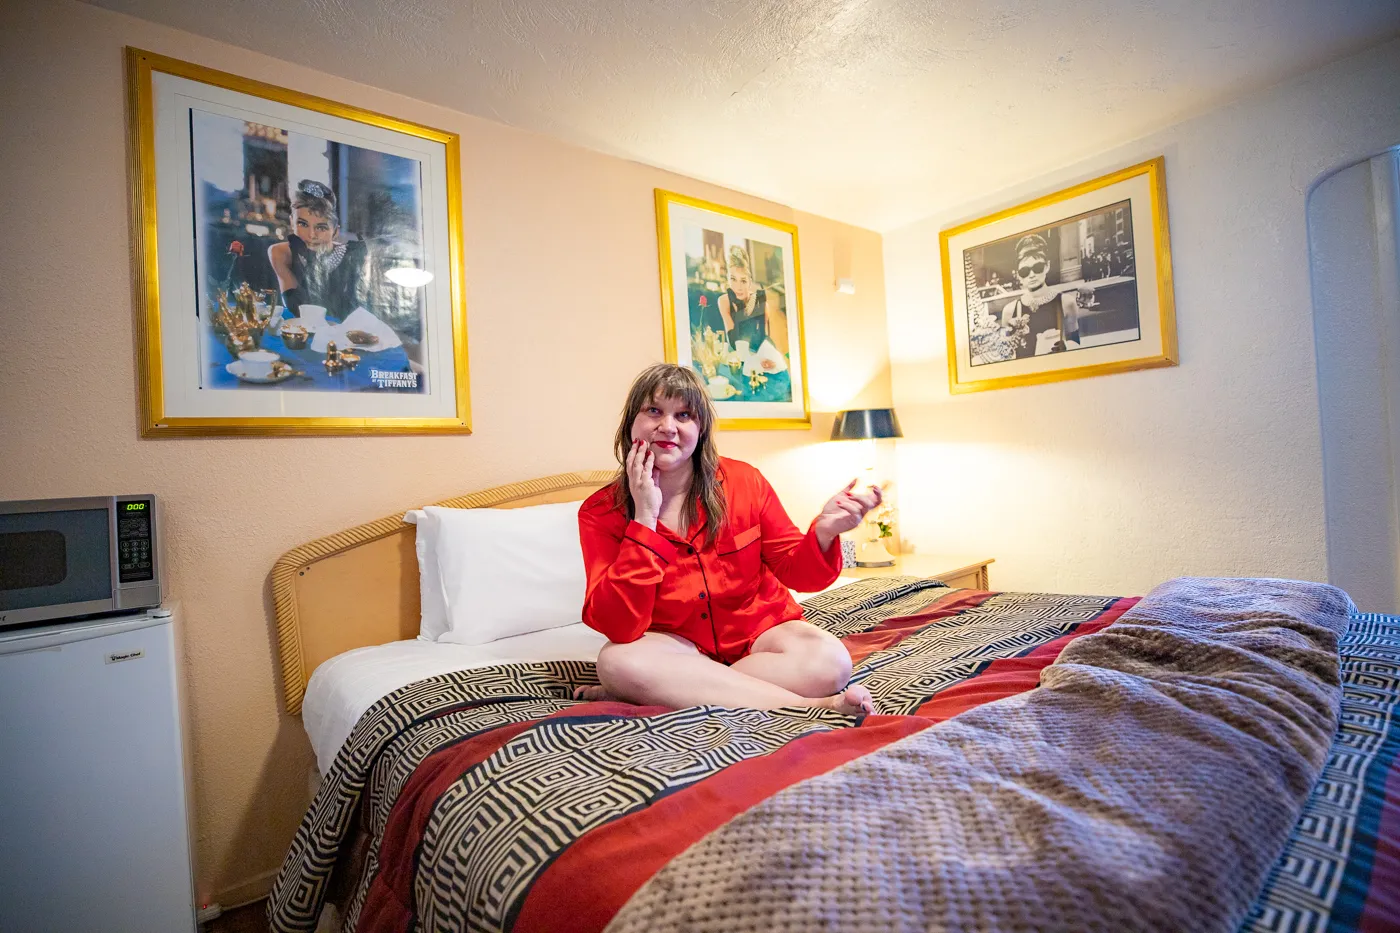 Audrey Hepburn Themed Motel Room - El Trovatore Motel in Kingman, Arizona -Route 66 Motel